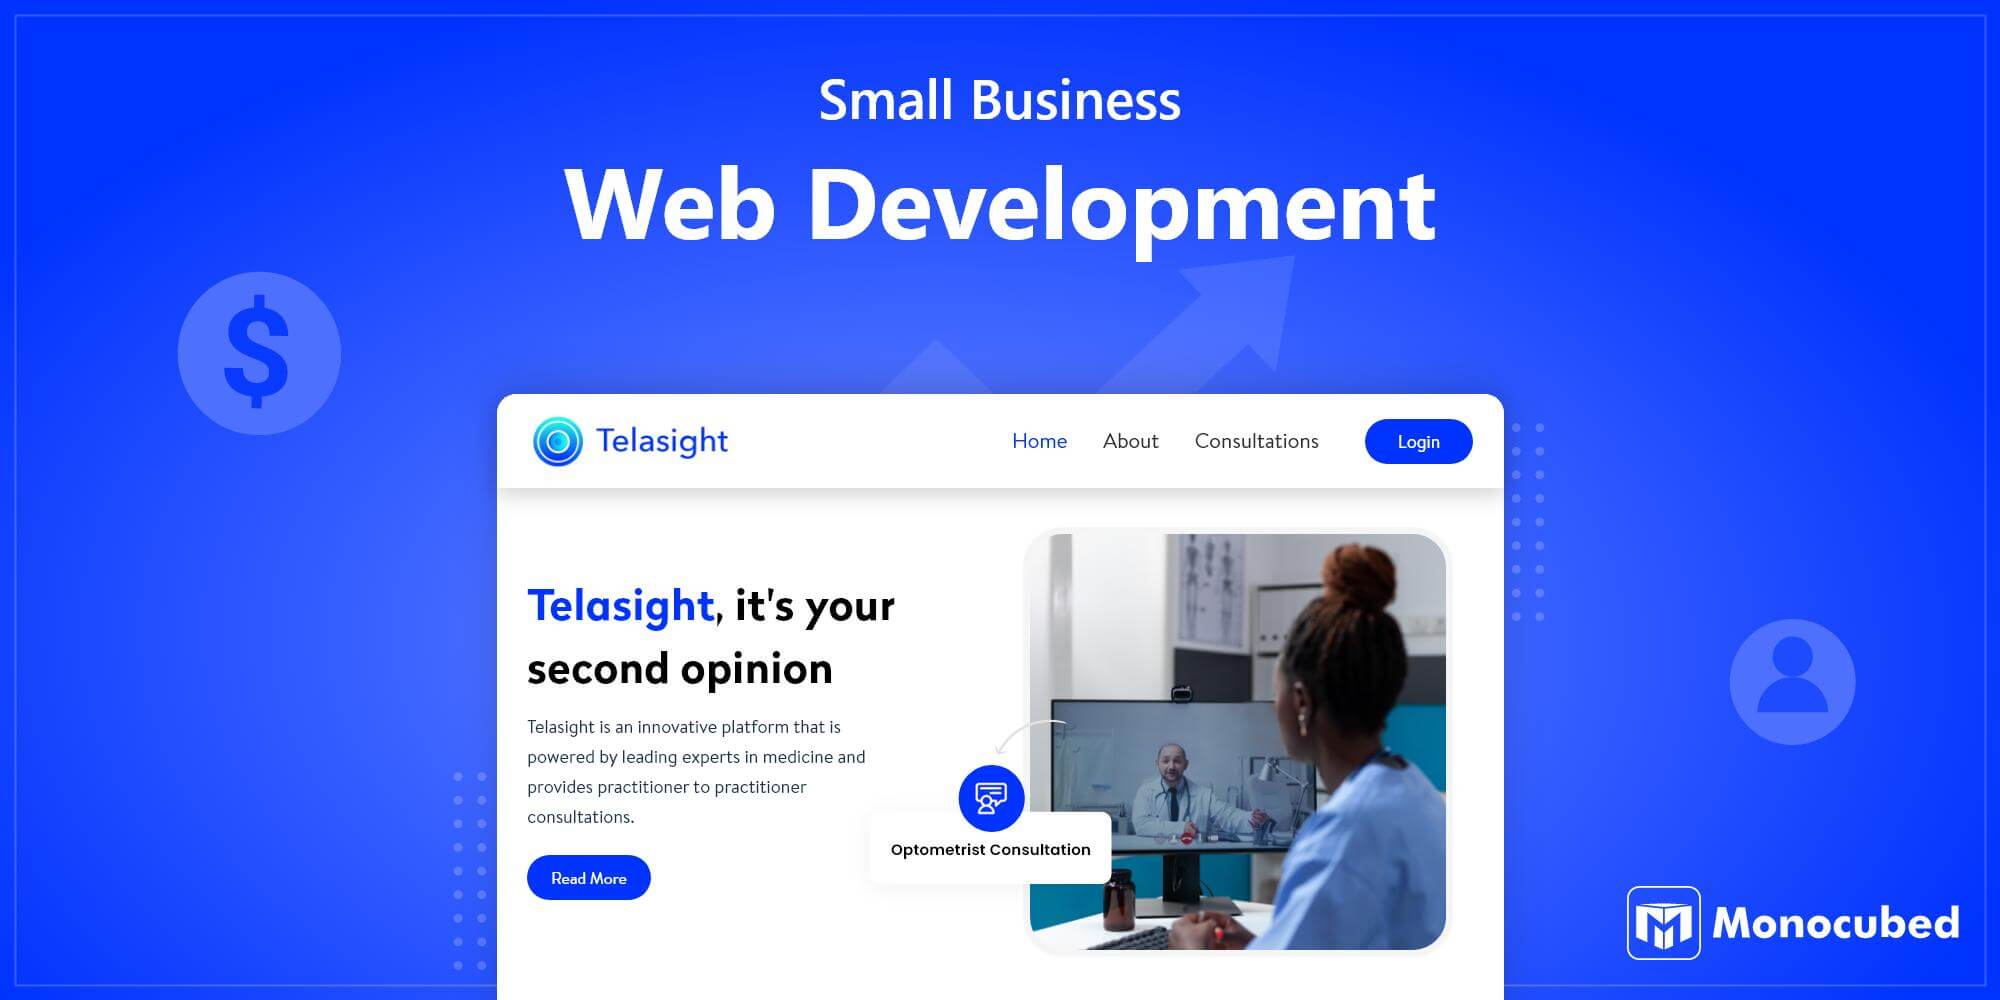 Small business web development